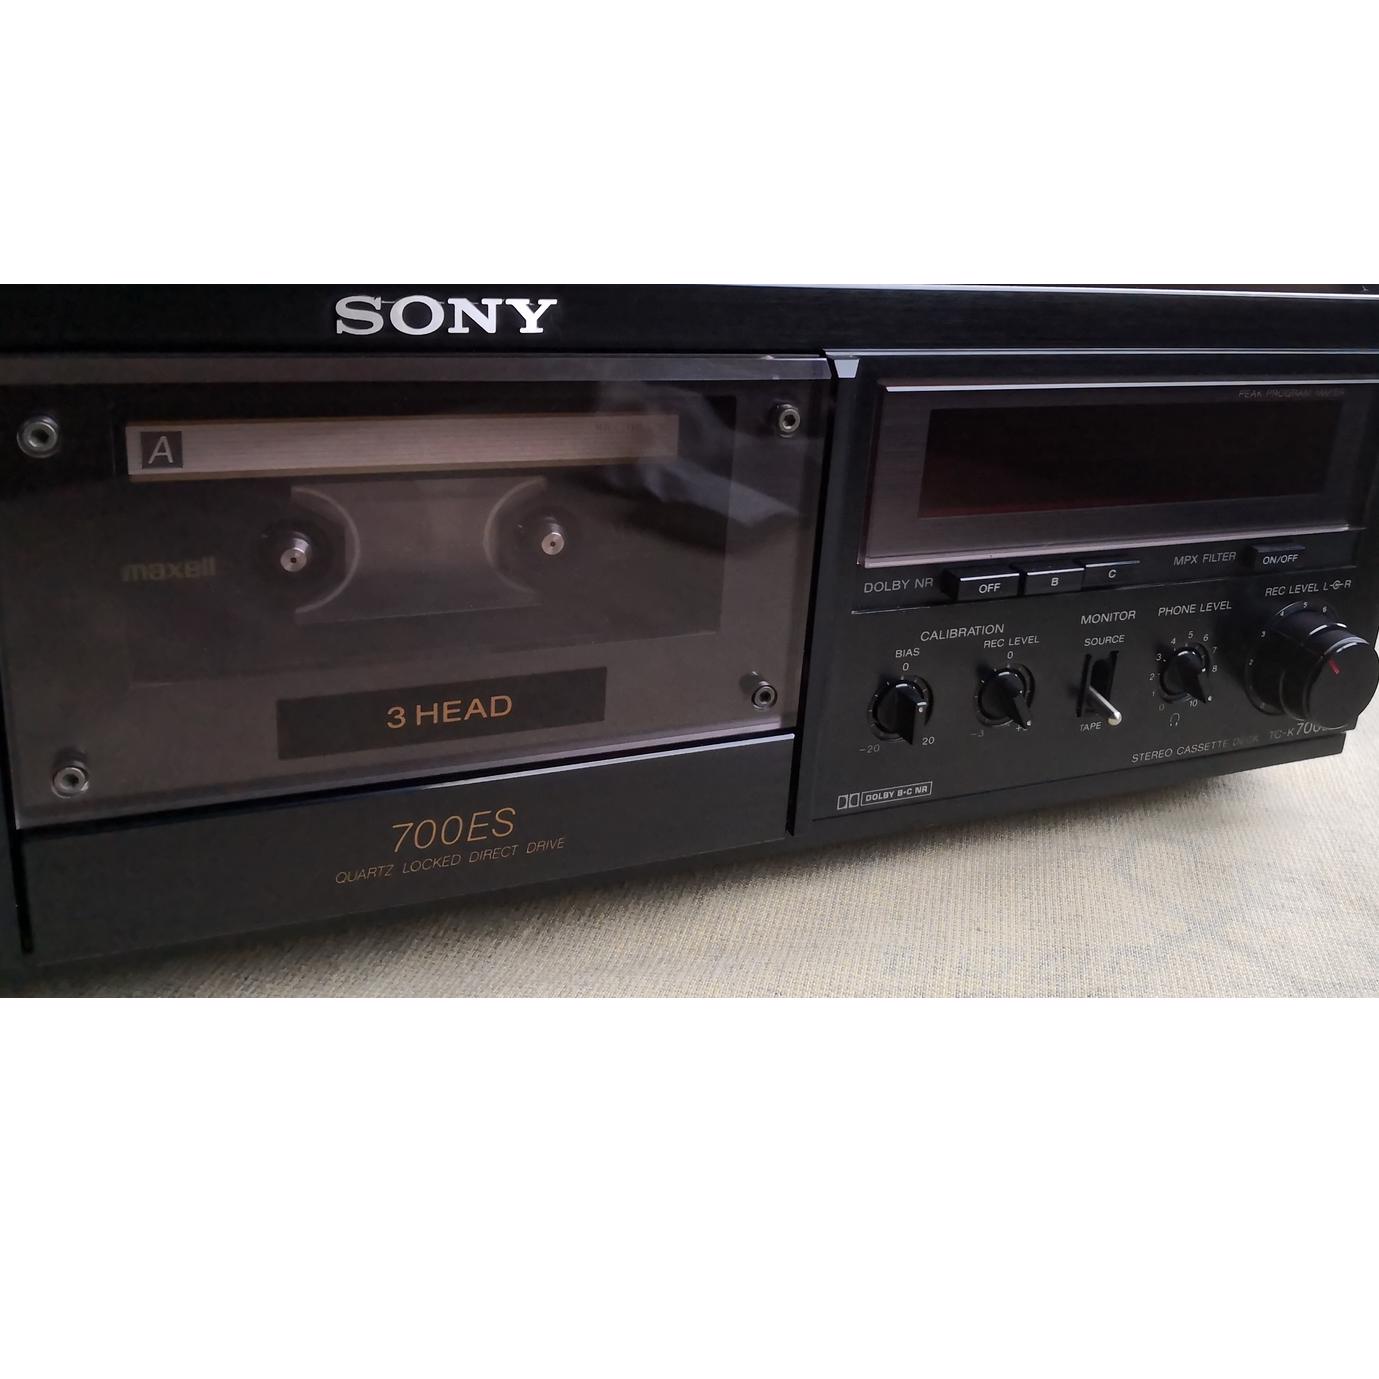 Sony tc-k700es kaset teyp - kusursuz durumda koleksiyonluk 